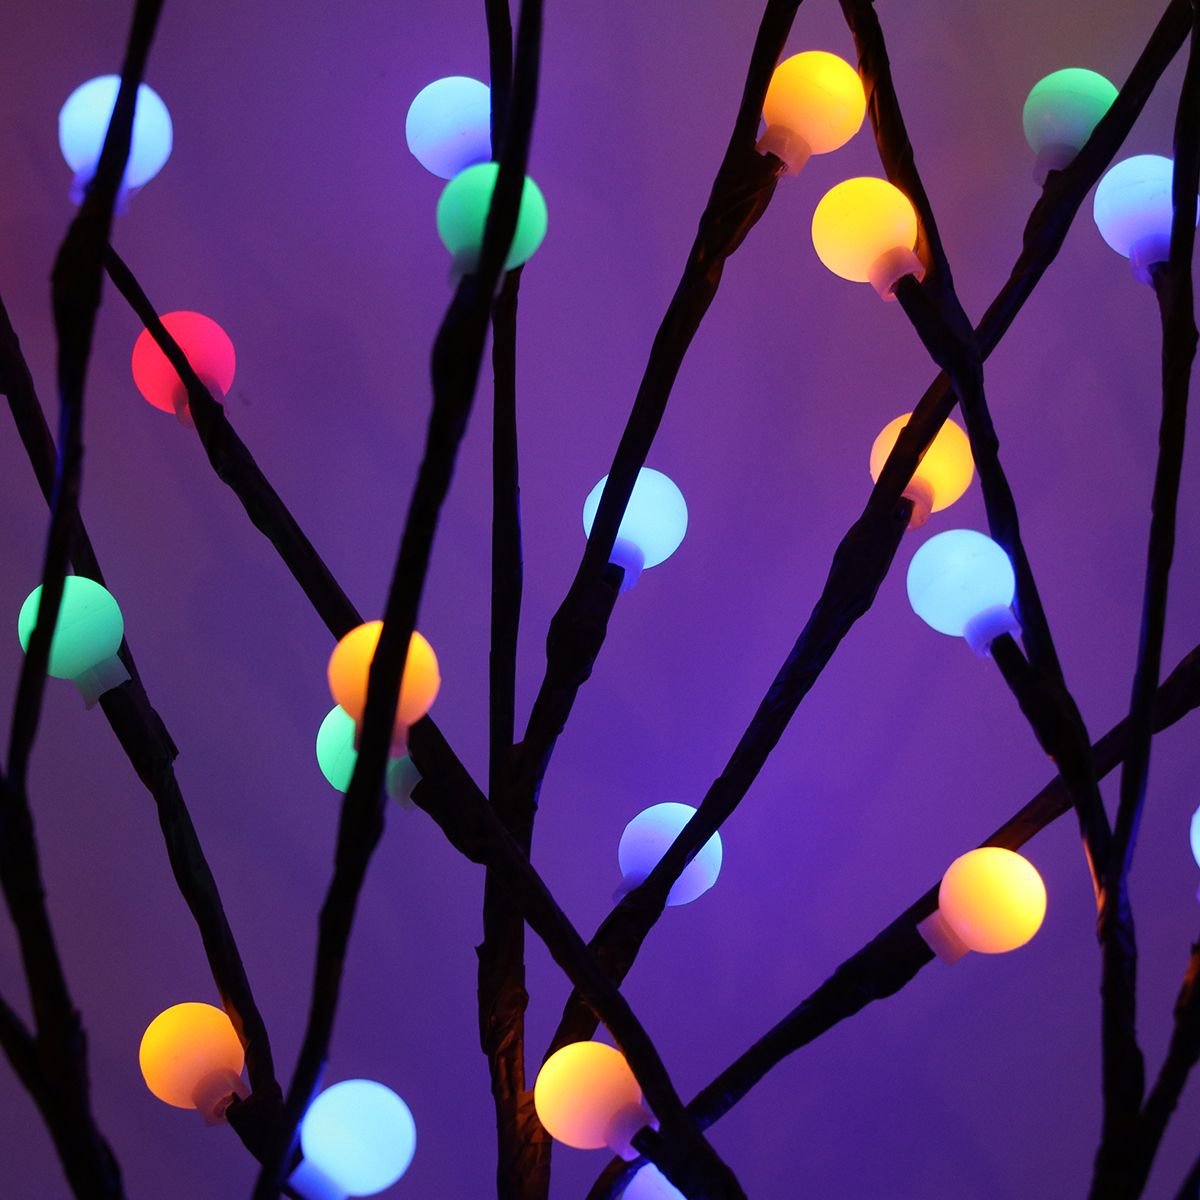 3pcs-Solar-Garden-Light-Outdoor-Decor-Tree-Ball-Lawn-Yard-Path-Lamp-Christmas-Decorations-Lights-1744199